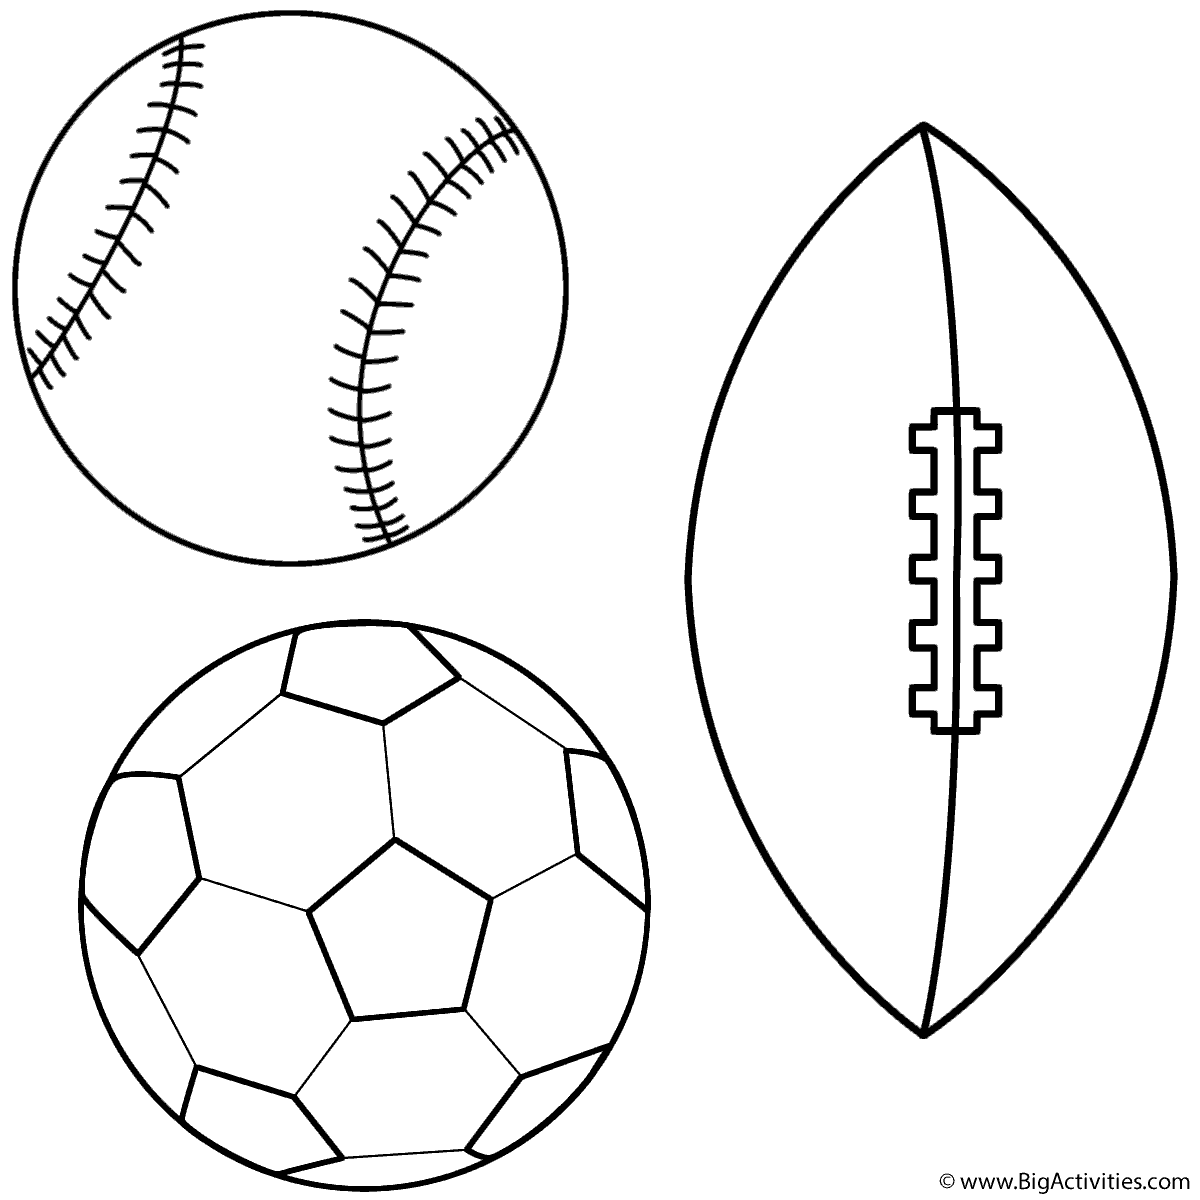 Download Baseball, Soccer Ball and Football - Coloring Page (Sports)